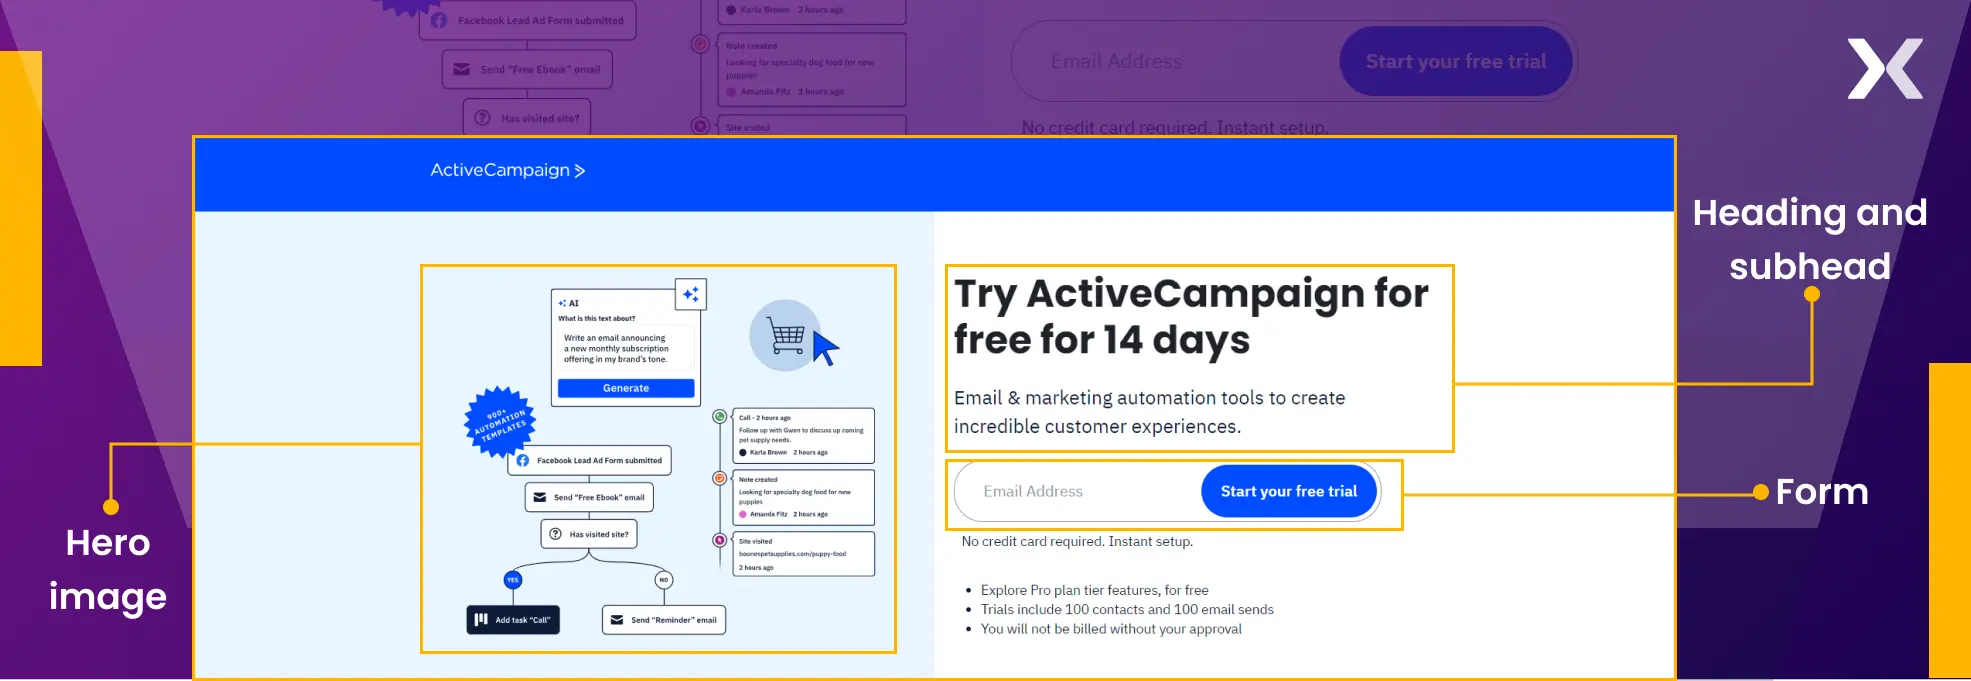 activecampaign-free-trial-landing-page.webp